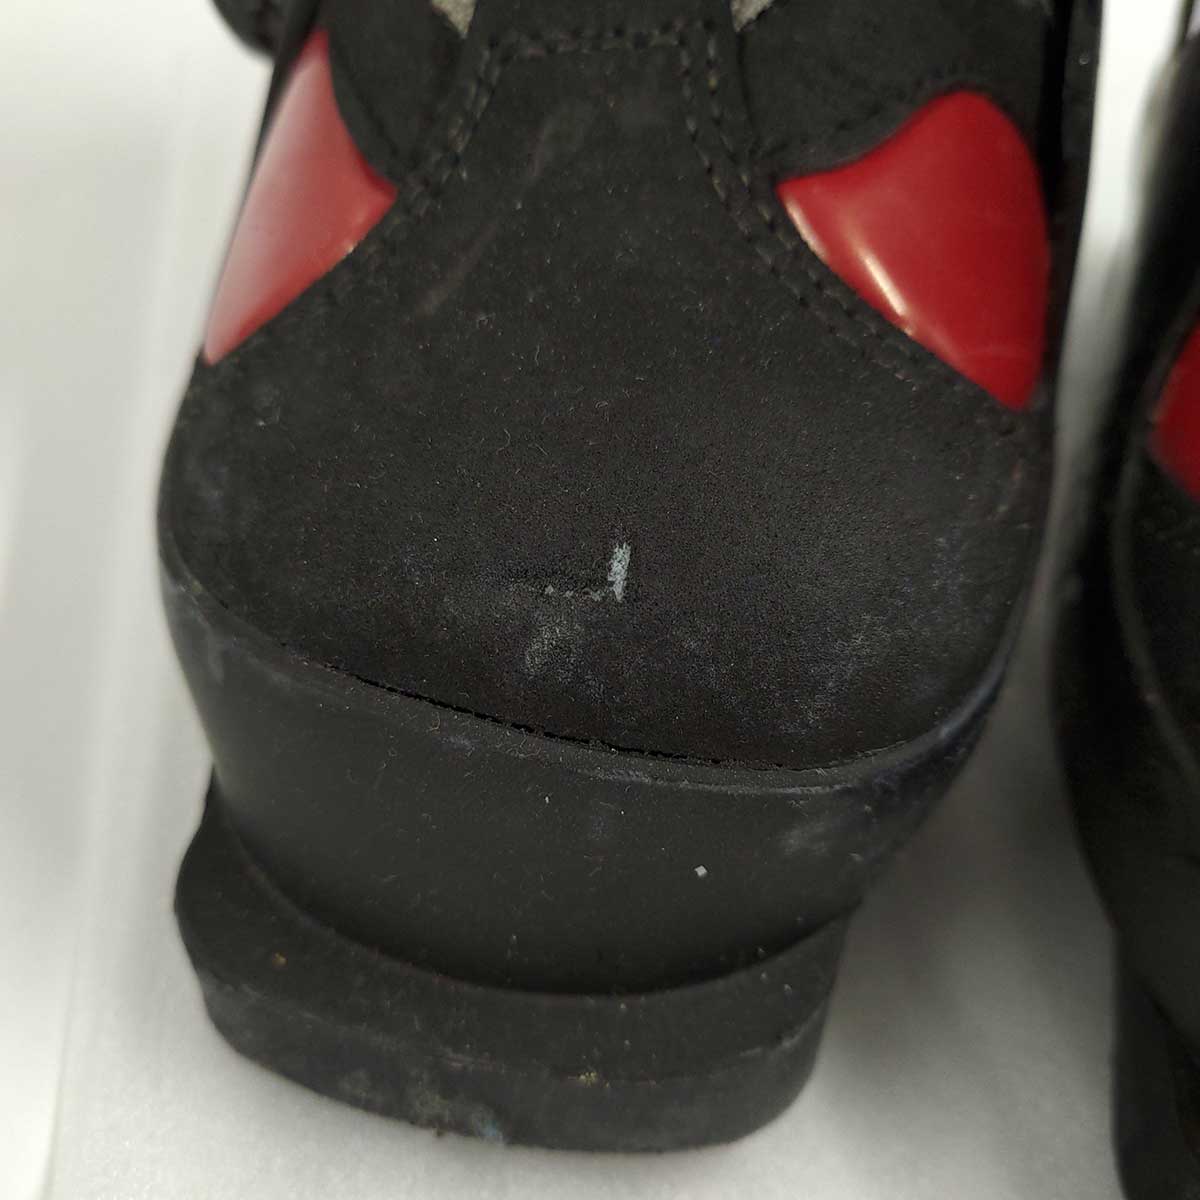 [ б/у ]DOLOMITE TOP FAN мягкие ботинки Dolomiti лыжи ботинки SKI SOFT 27.5cm мужской 